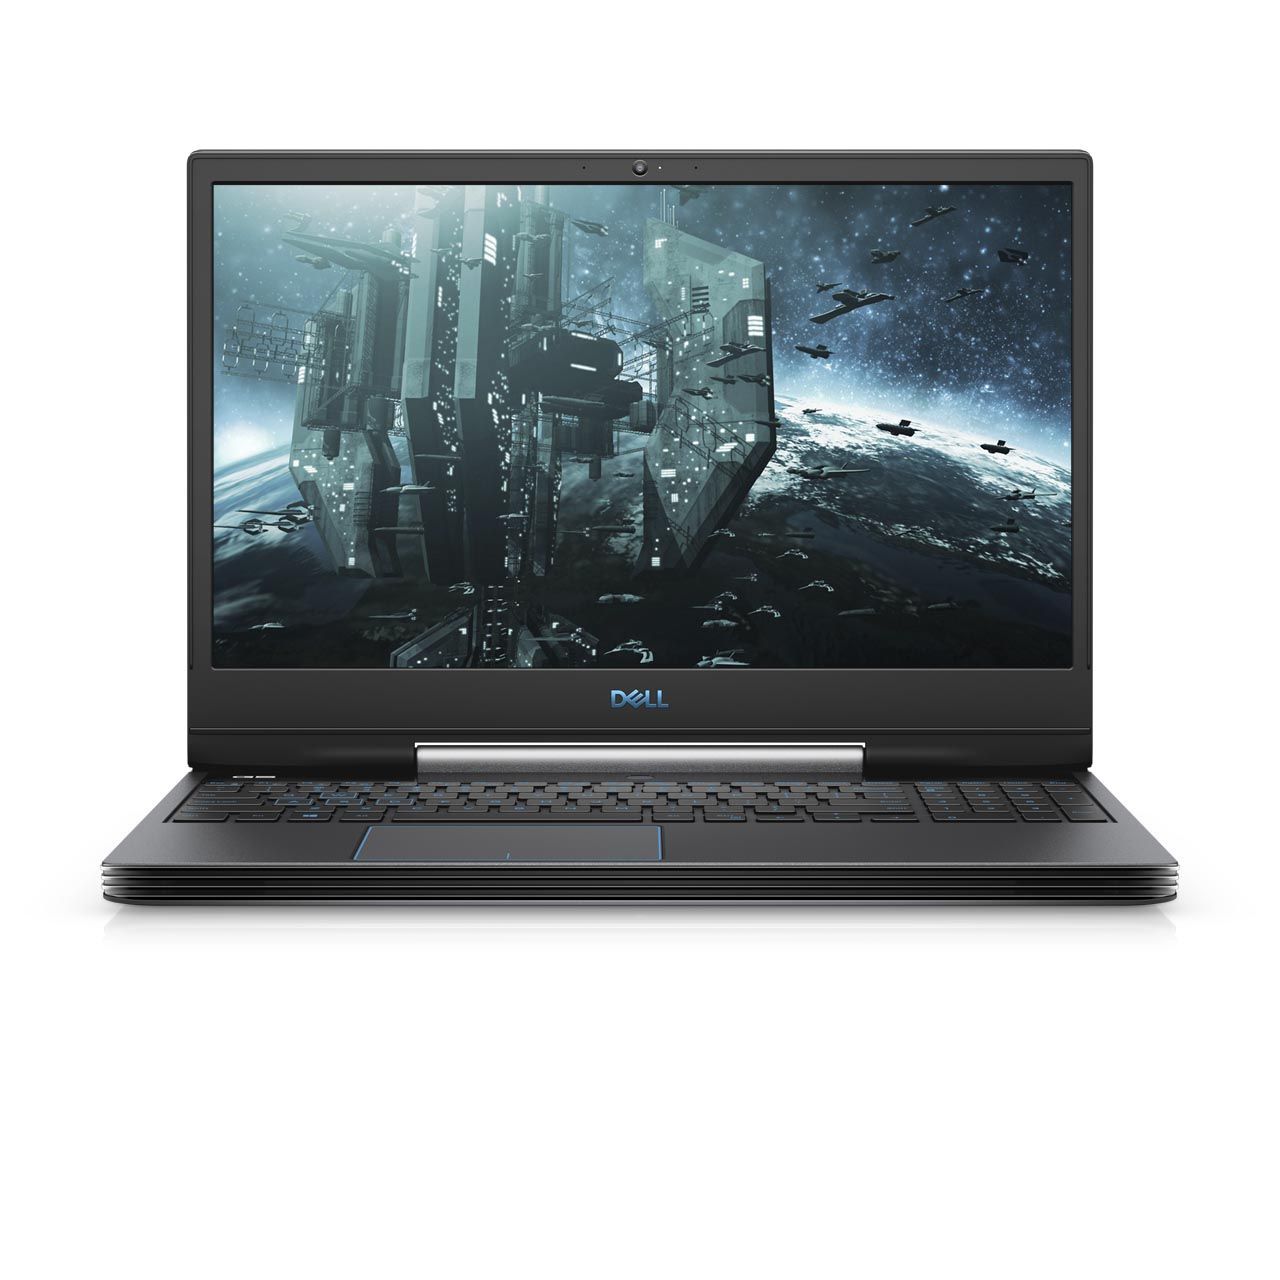 Dell 5590-G5-E1362 Laptop i7-9750H/16GB/1TB HDD+256GB SSD/NVIDIA GeForce RTX 2060 6GB/15.6 FHD/144Hz/Windows 10/Black